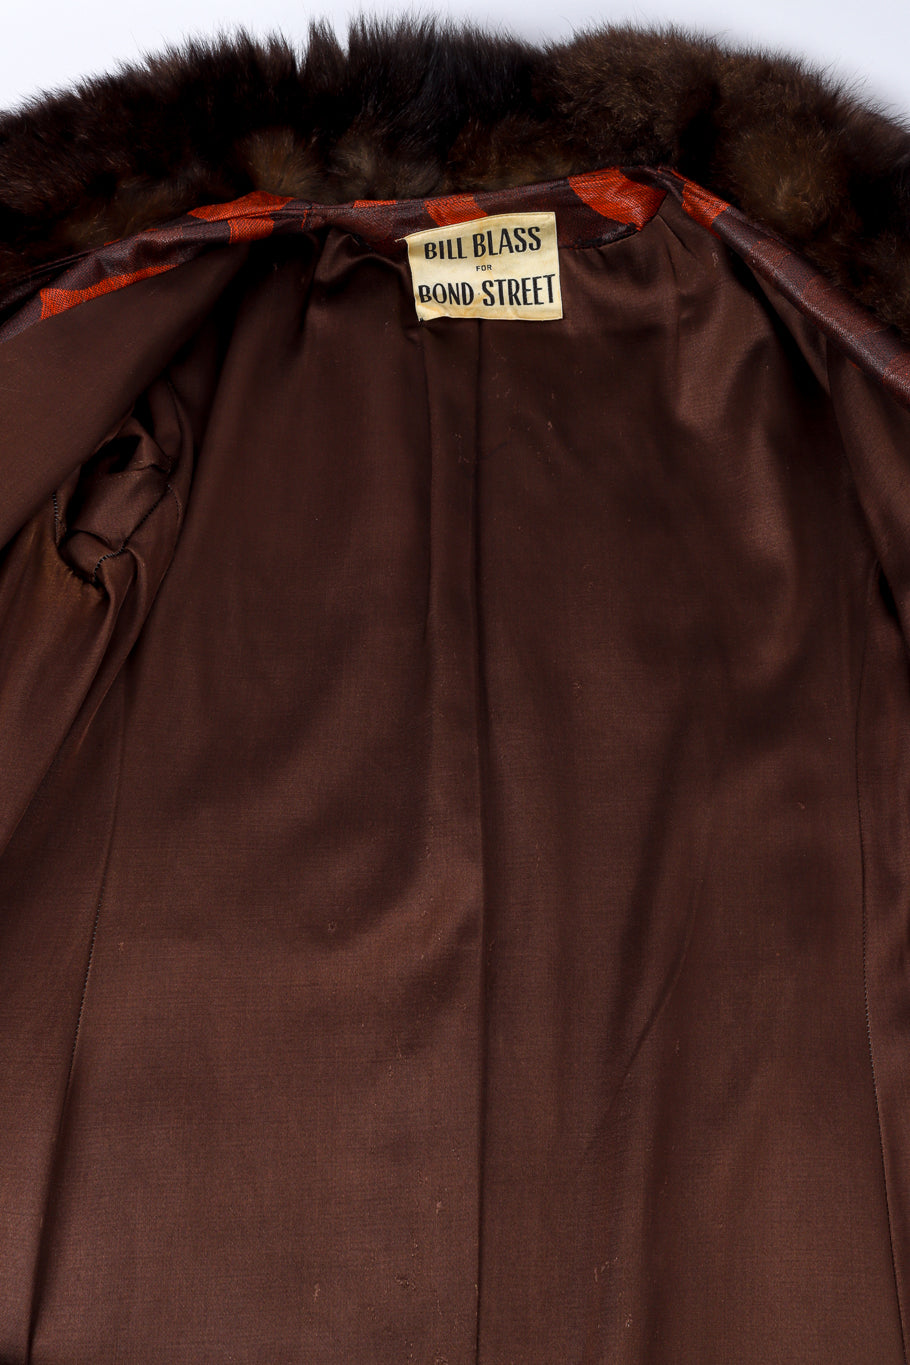 Vintage Bill Blass Circle Fur Trim Coat view of lining @recess la